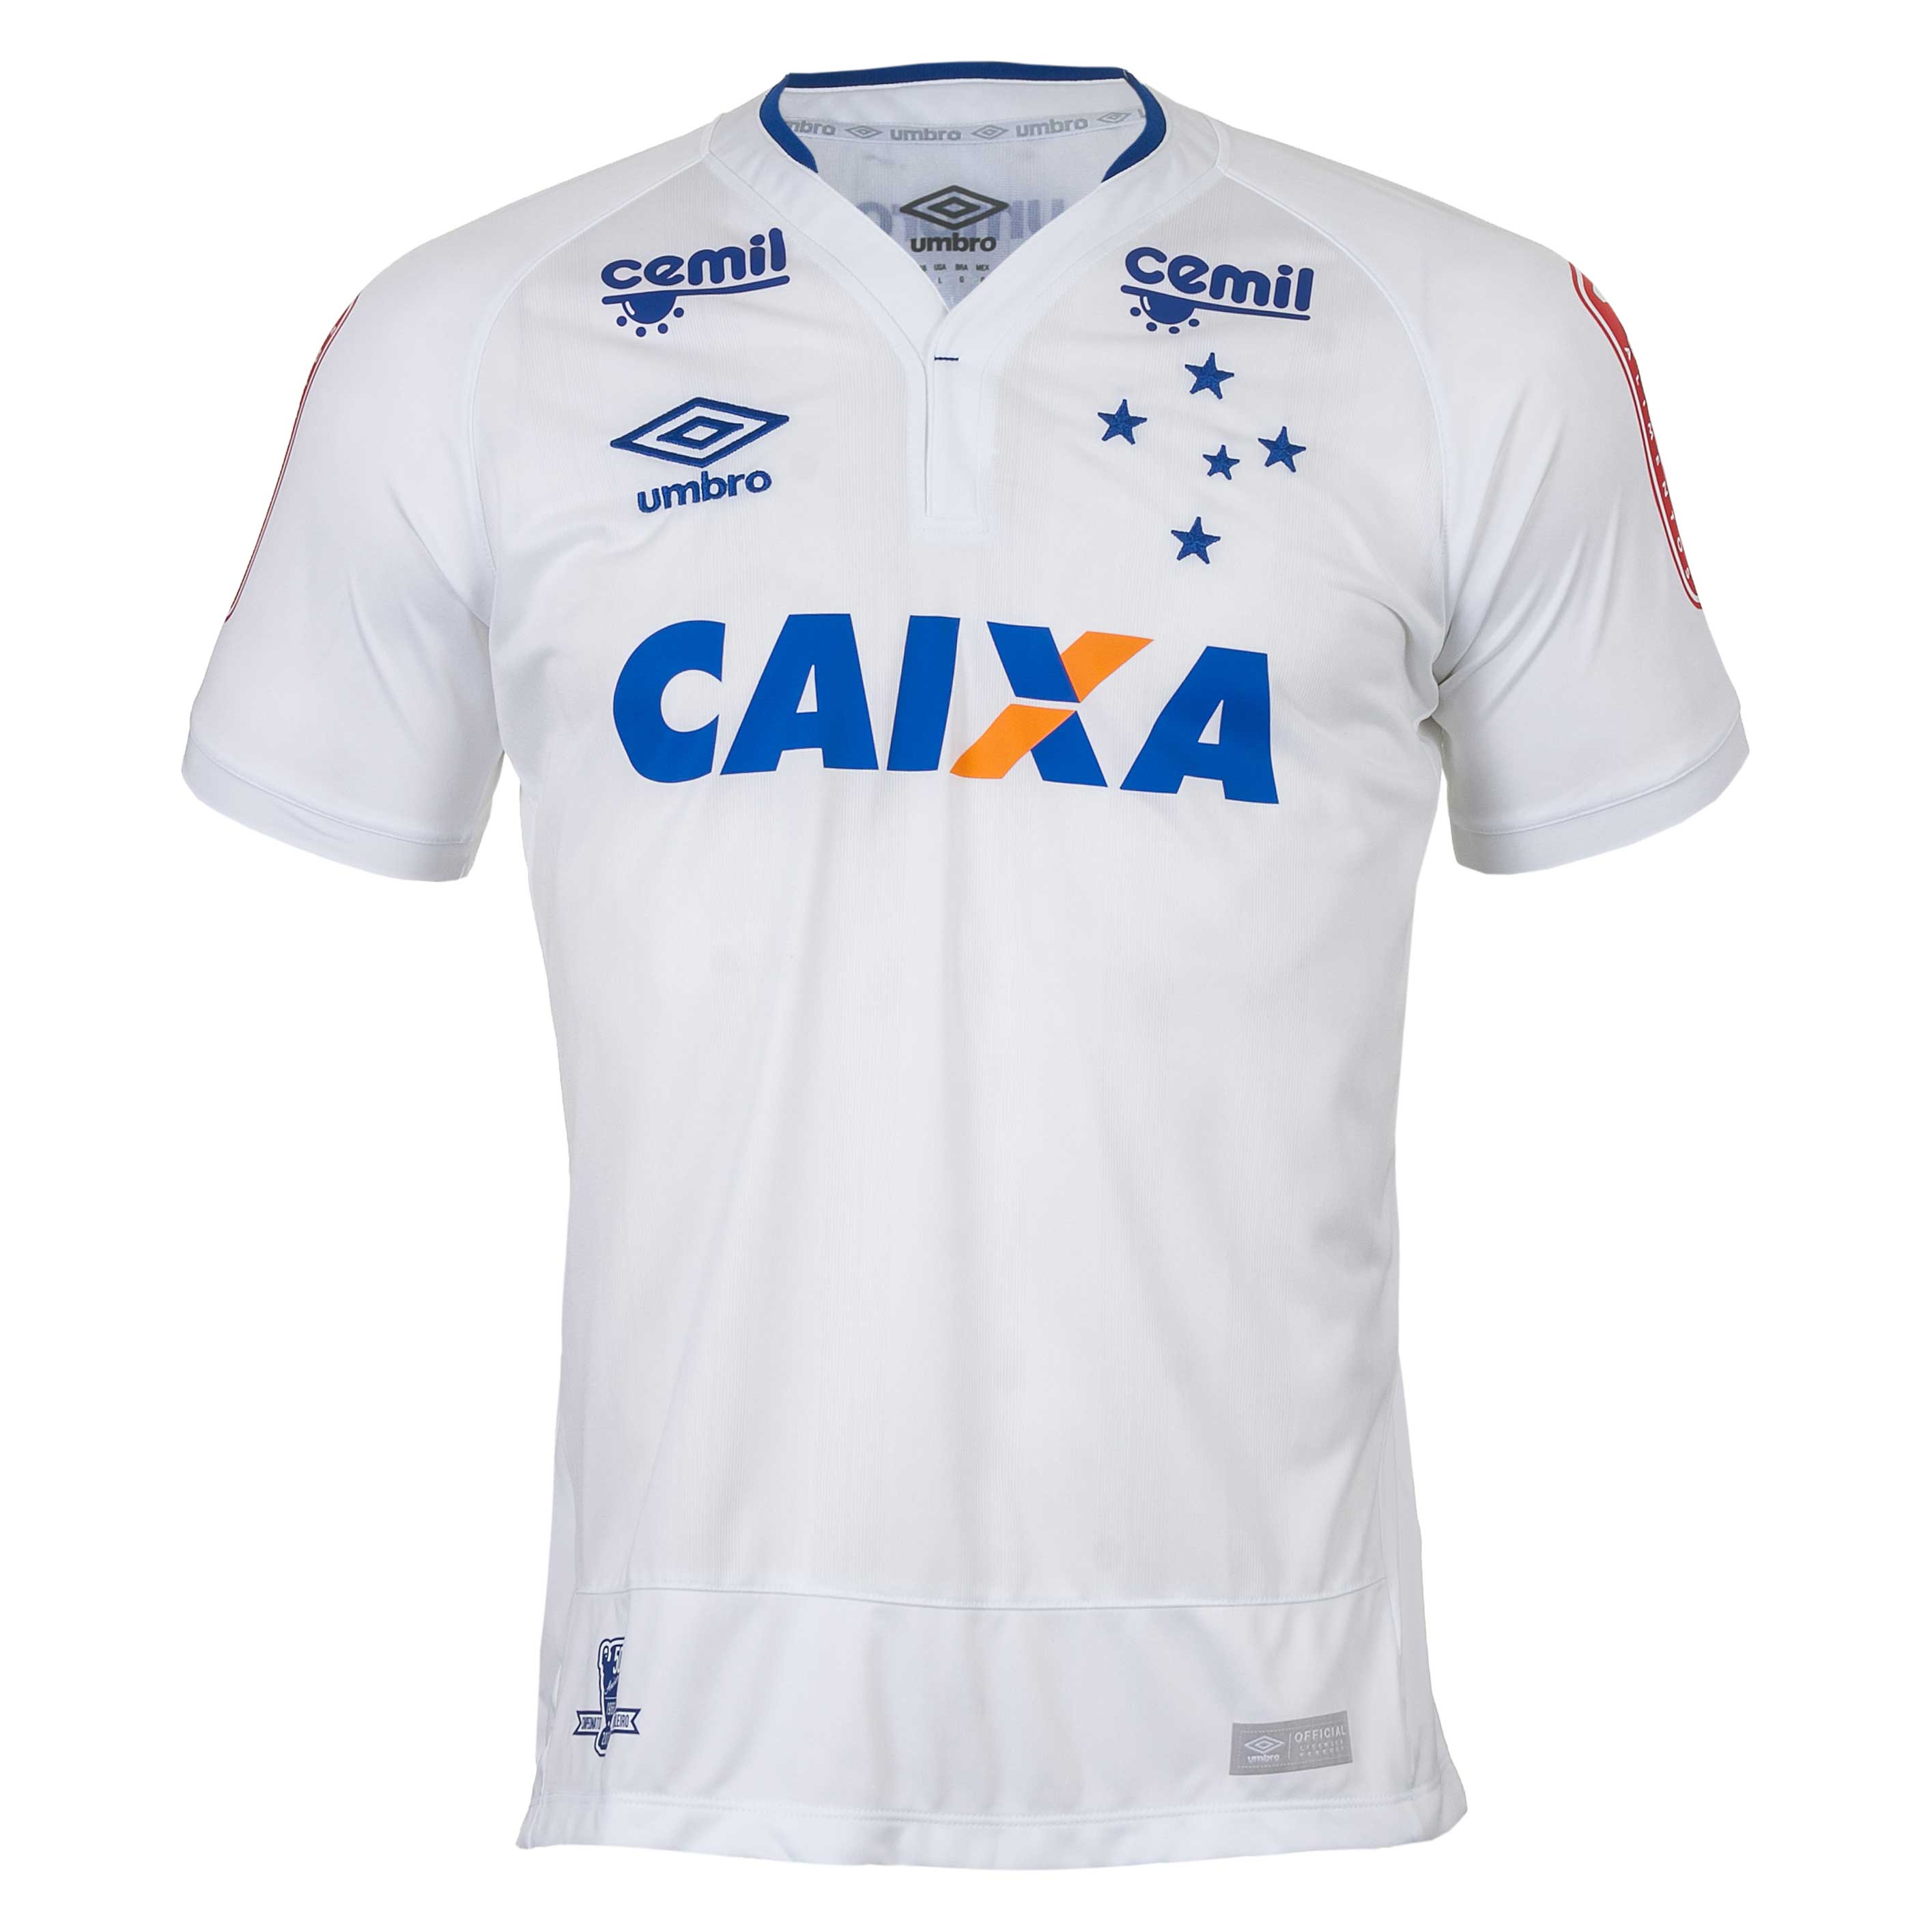 Camiseta Masc. Umbro Cruzeiro Of 2 Esporte - Indoor - Branco/Azul